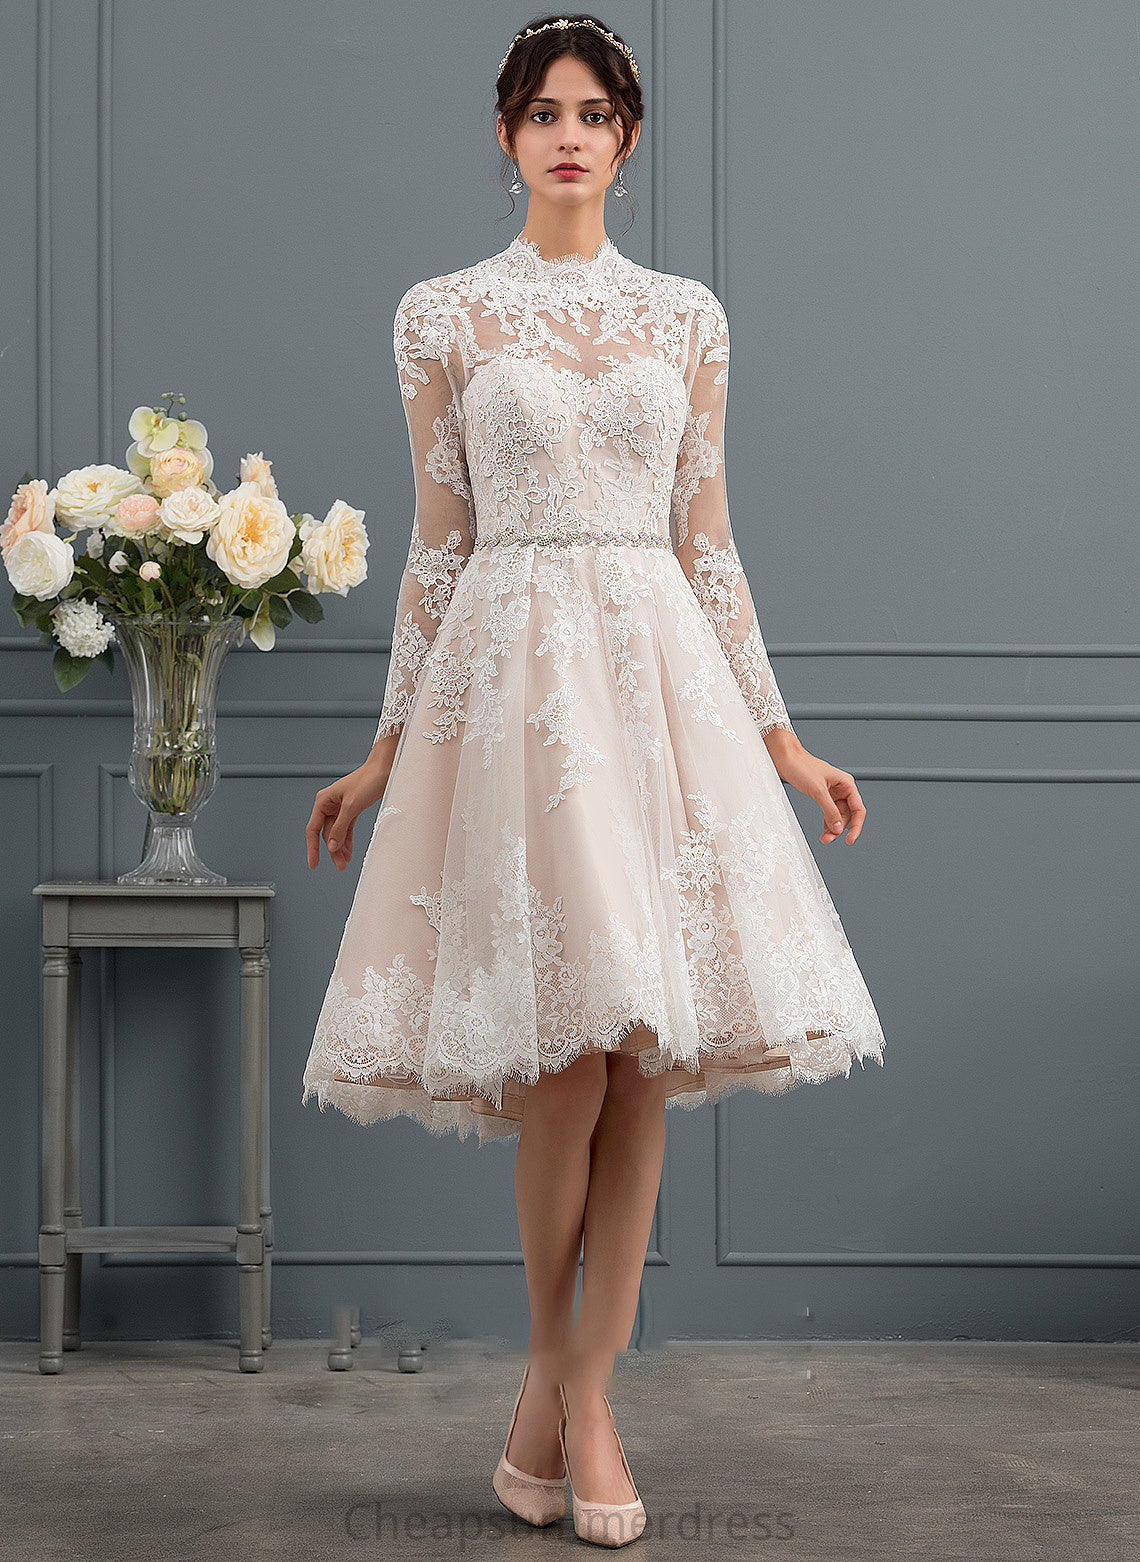 Wedding Dresses Knee-Length Illusion Lace Adrianna A-Line Dress Wedding